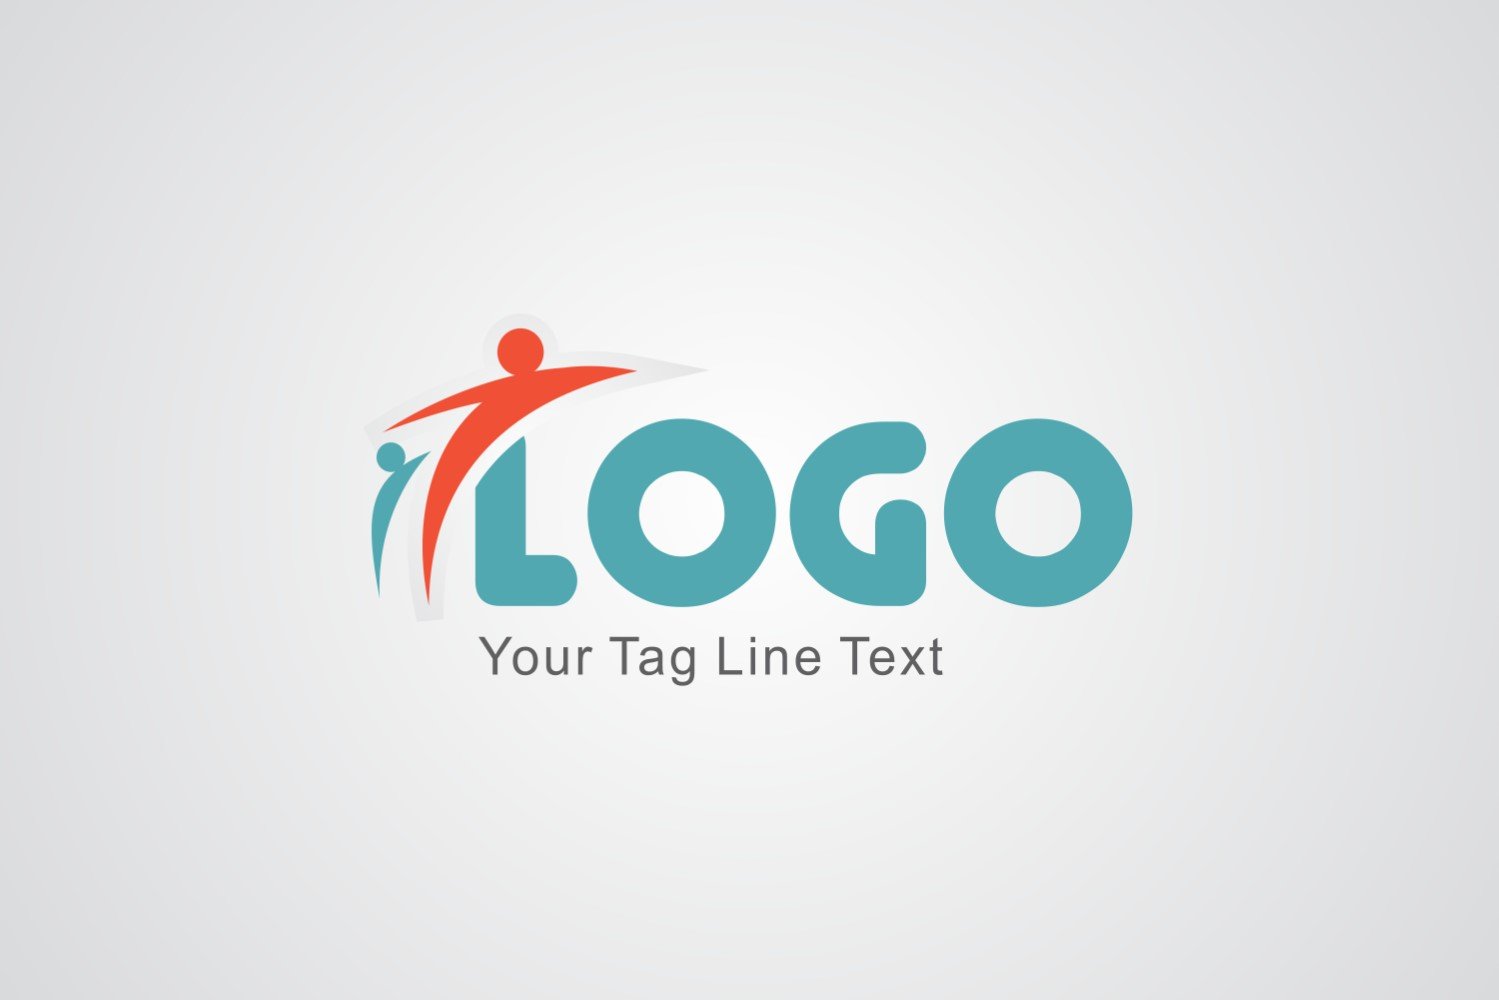 Logo Creative  Design Template